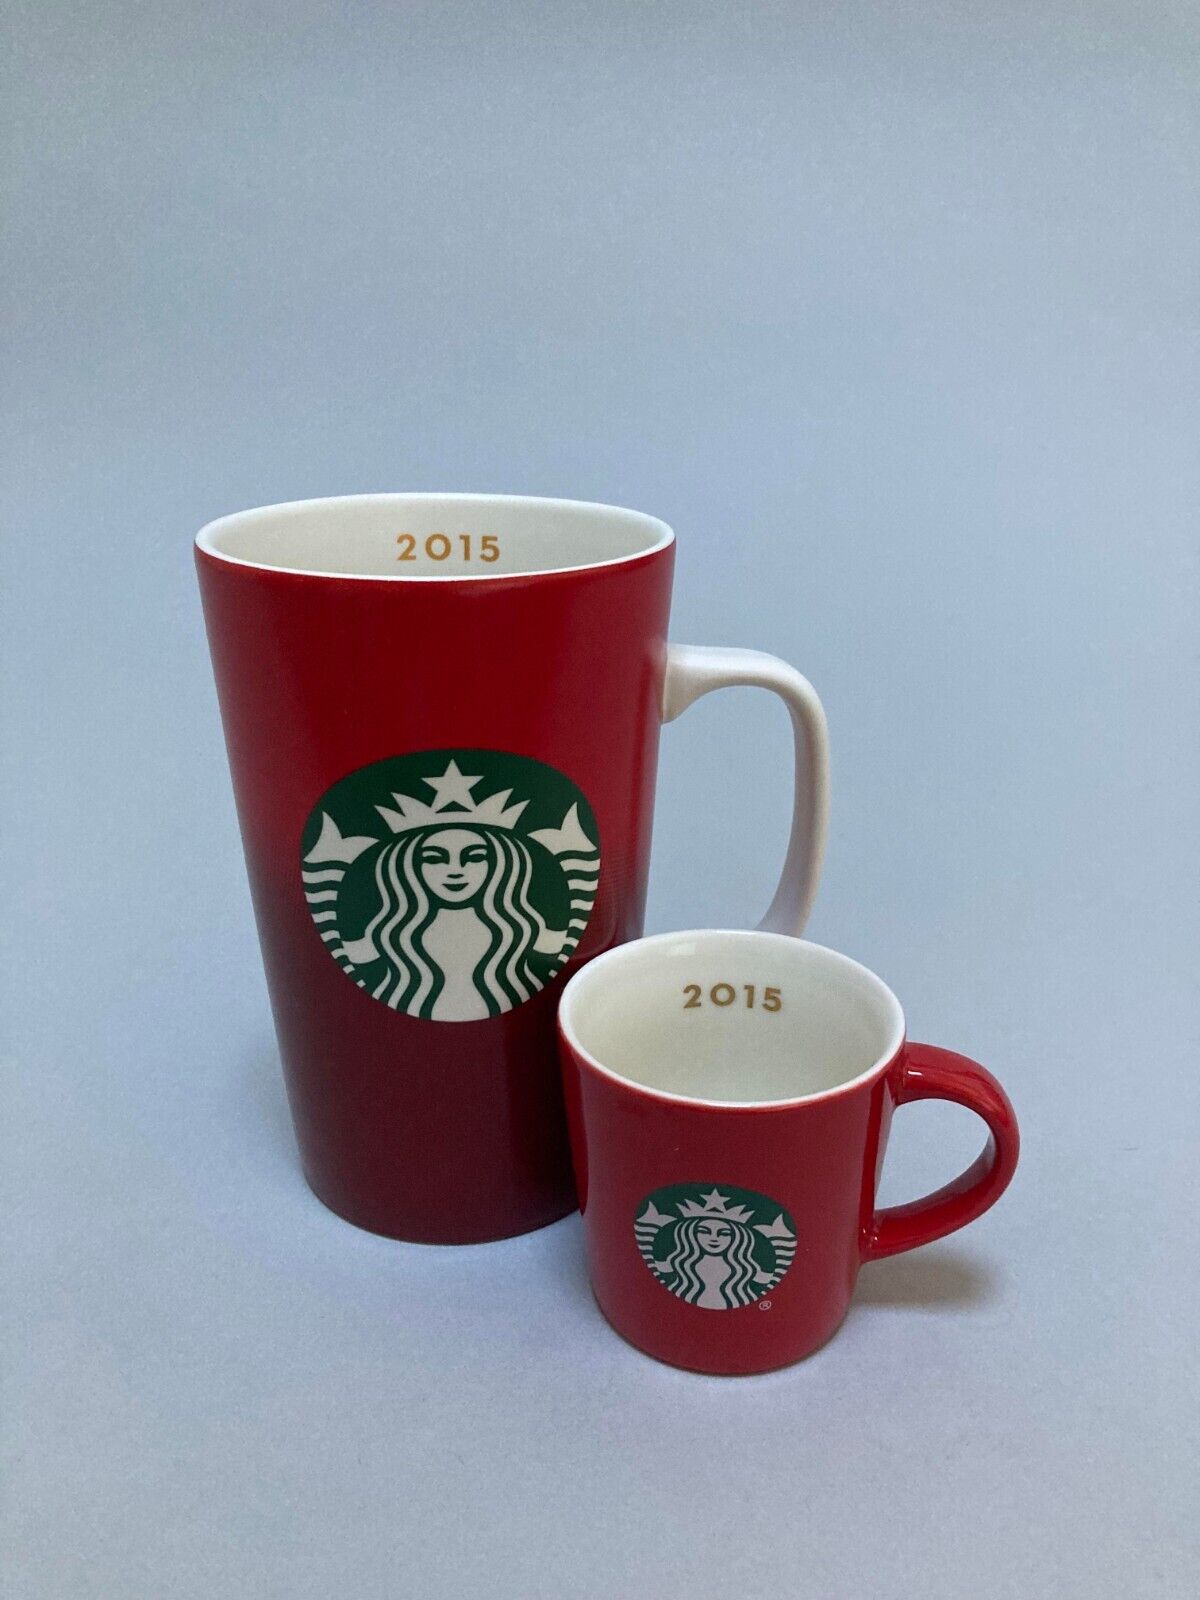 Starbucks Christmas Holiday Theme 16 oz Tall Red 2015 & 3 oz demitasse